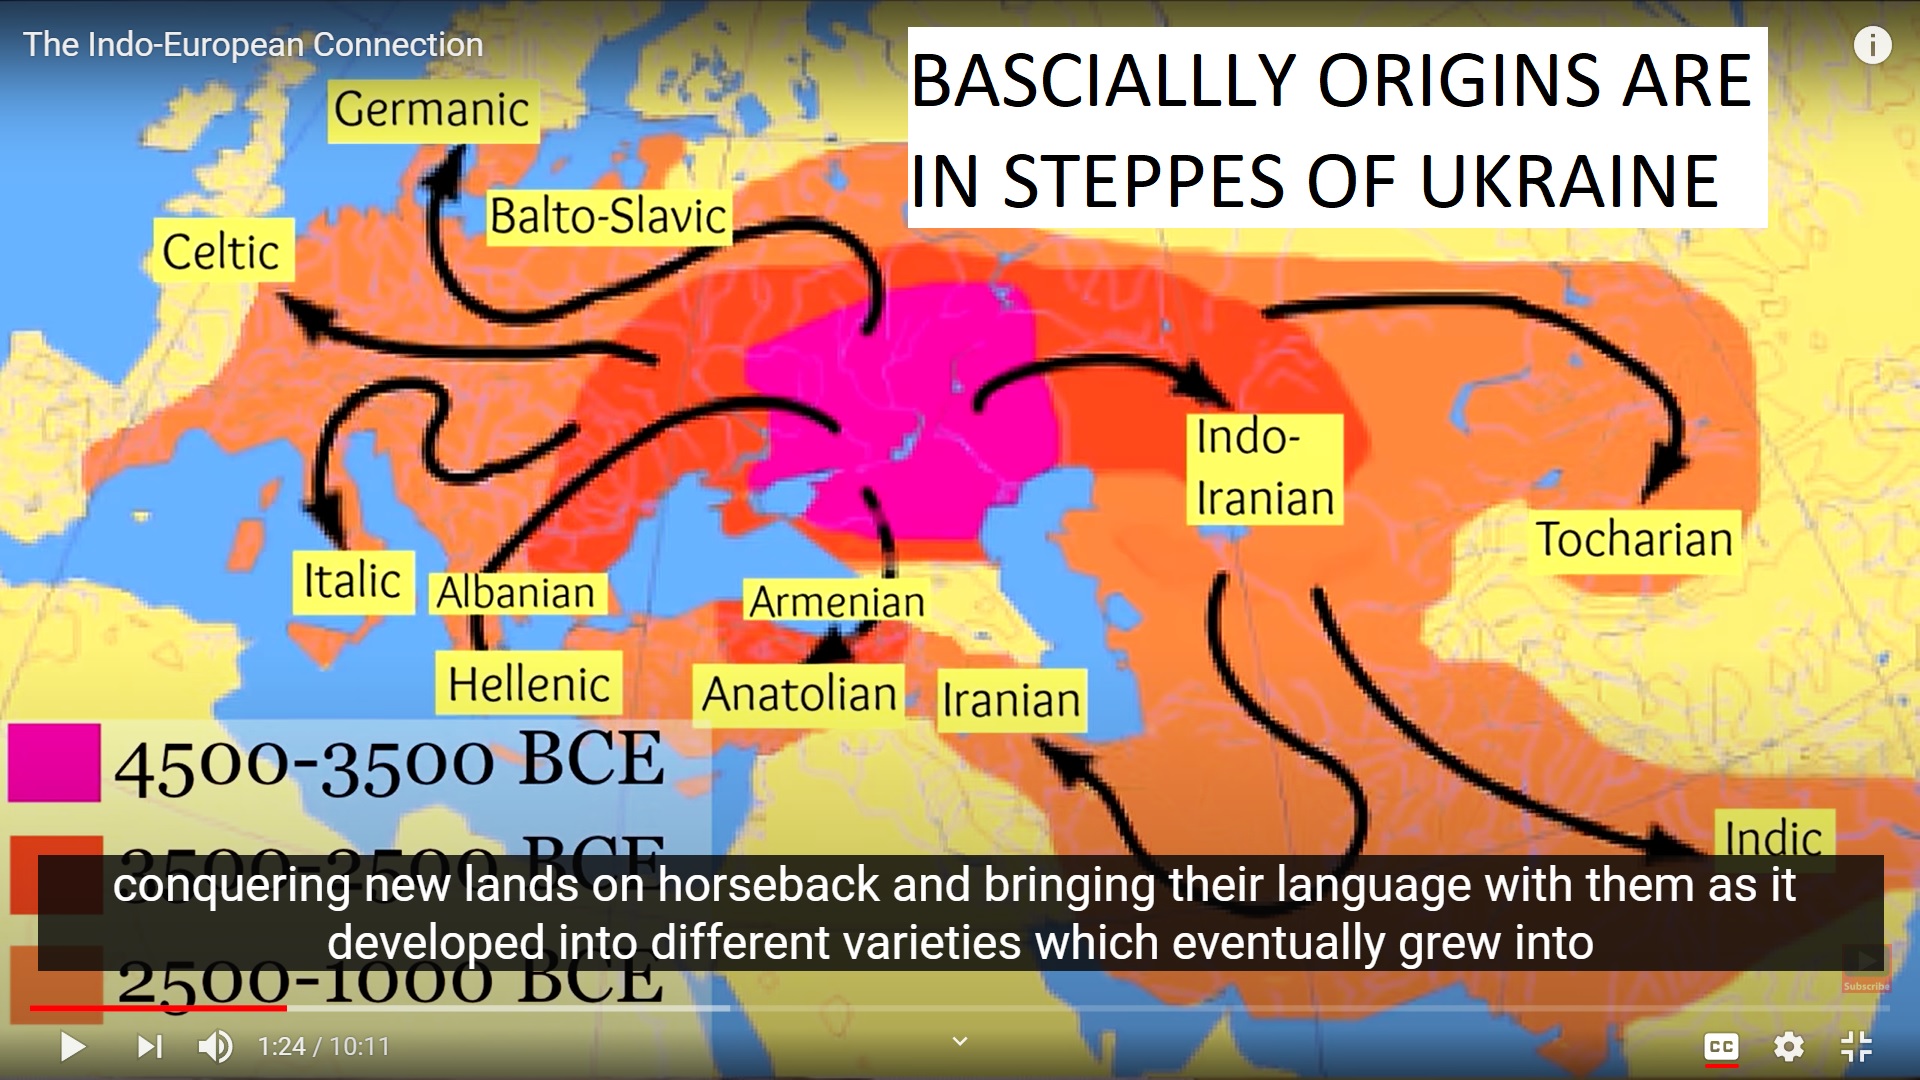 BASCIALLLY ORIGINS ARE IN STEPPES OF UKRAINE